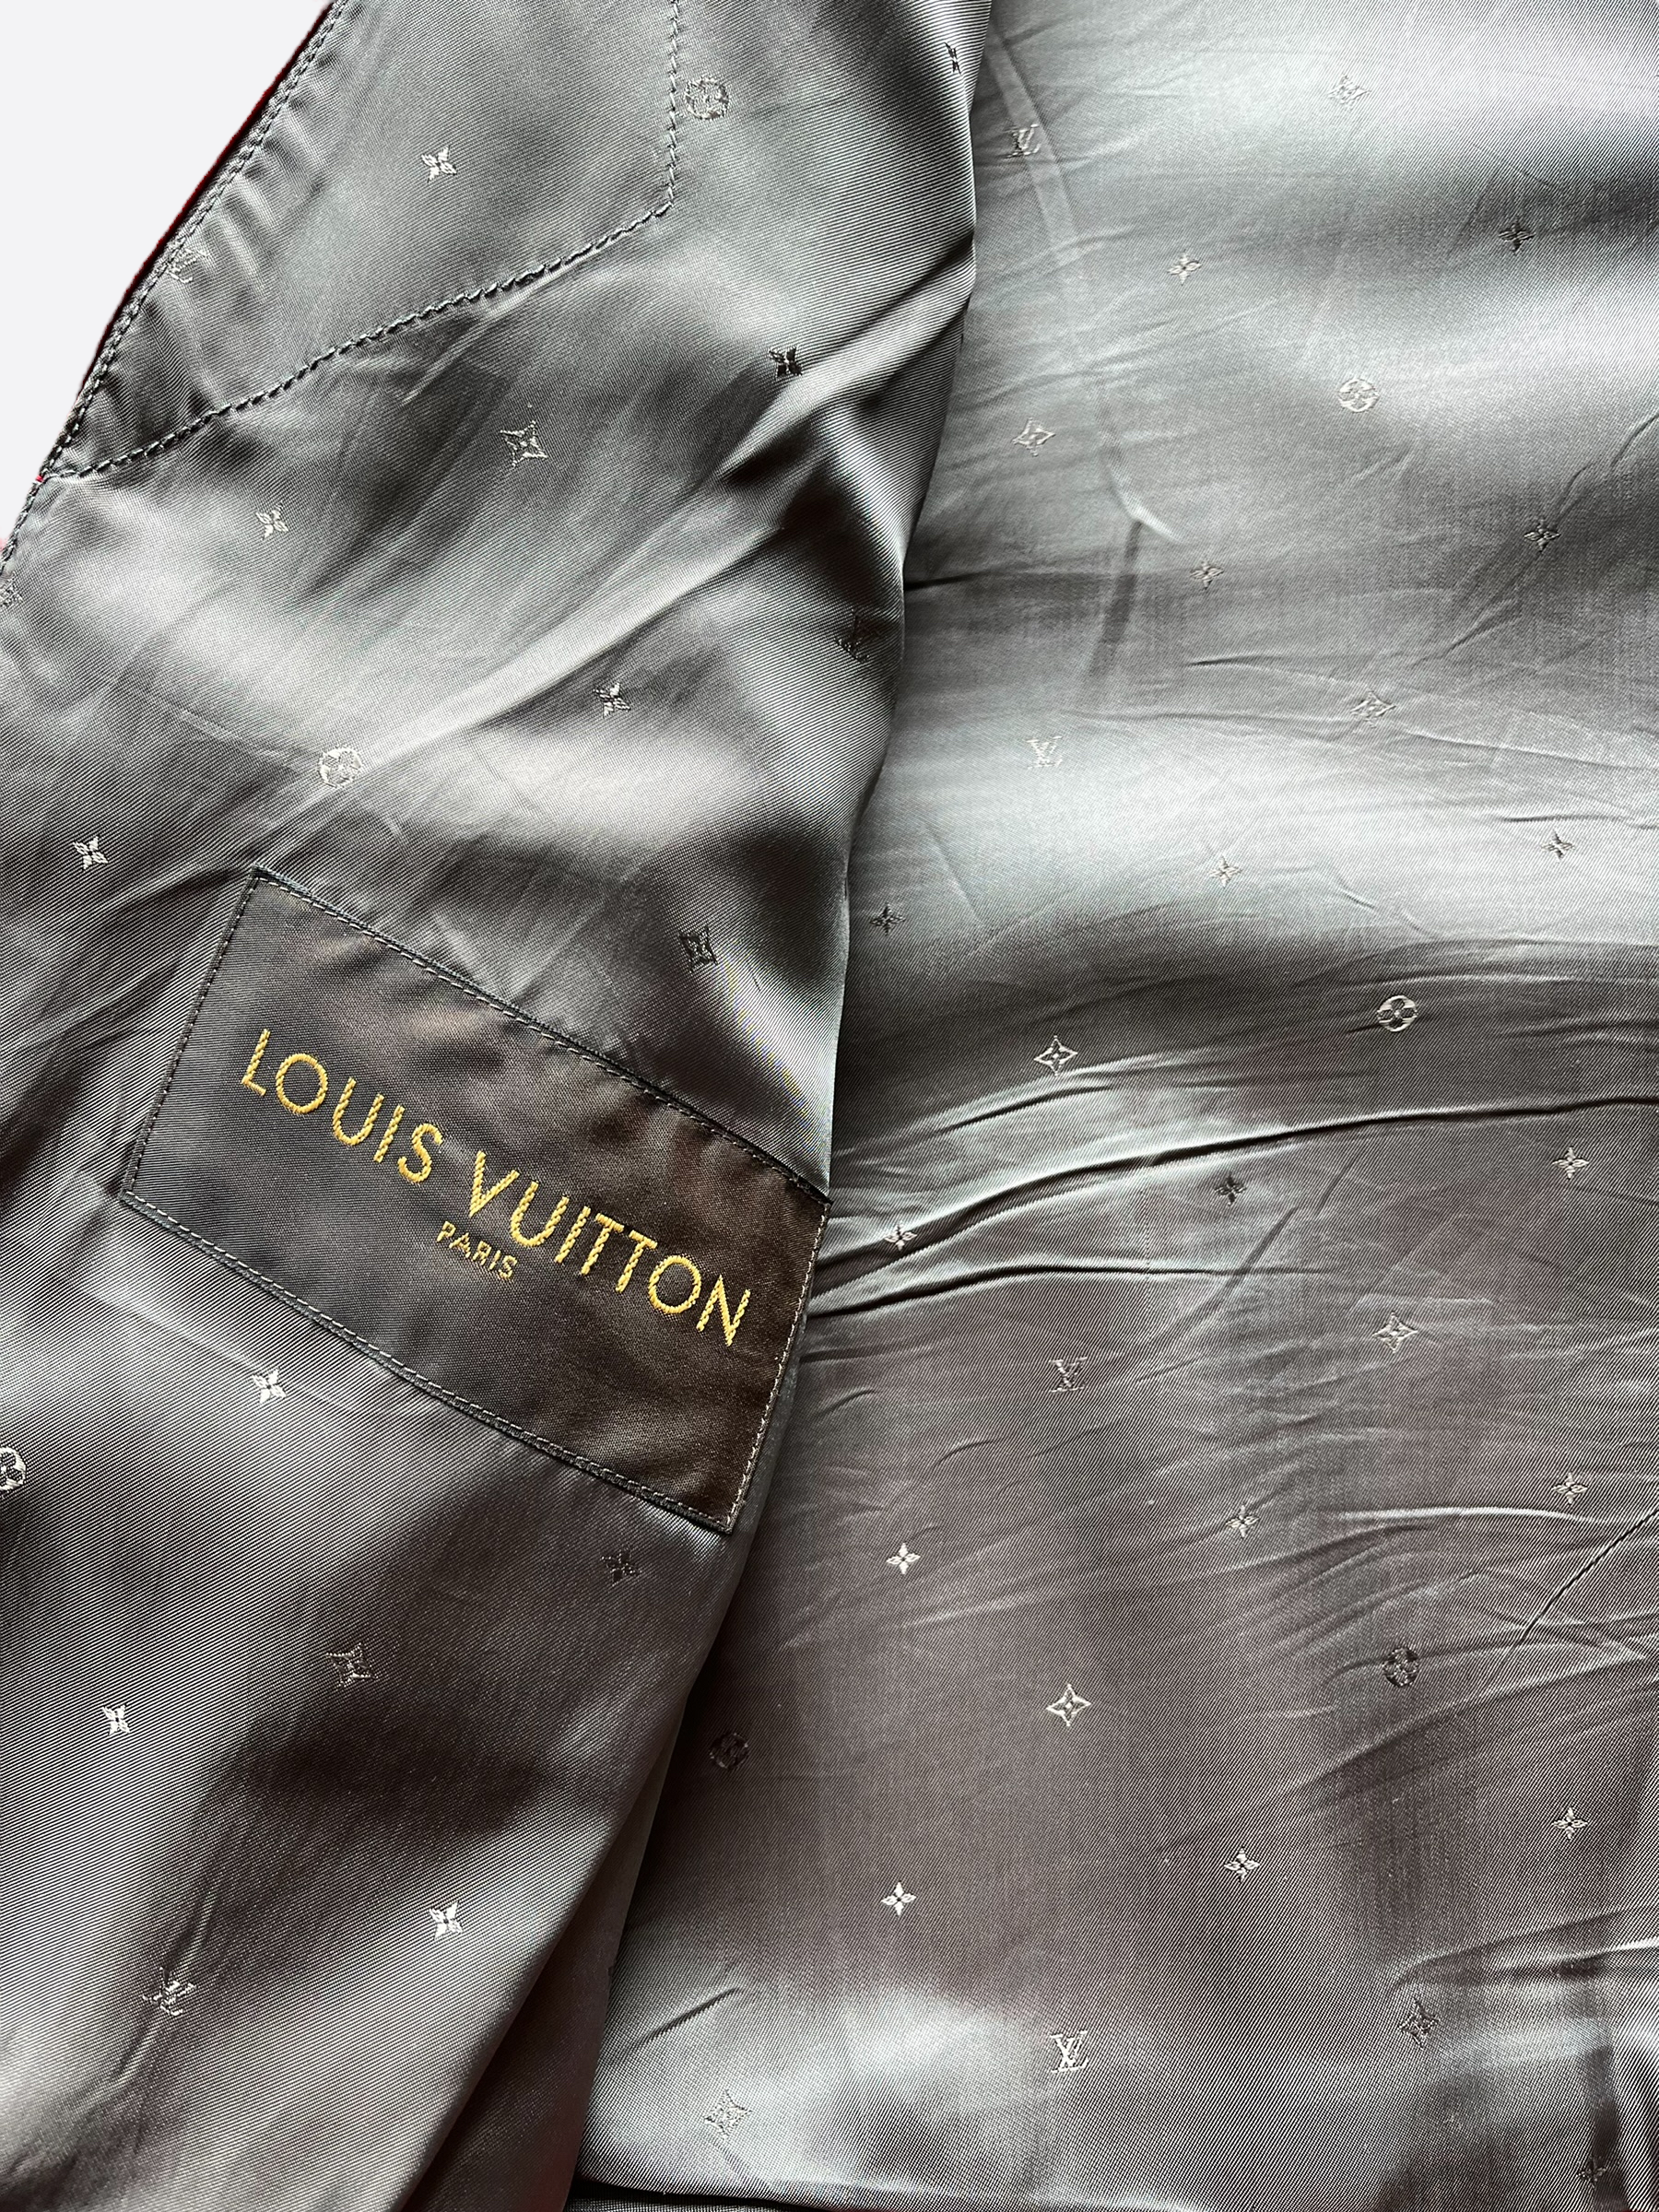 Louis Vuitton Supreme Monogrammed Leather Bomber Jacket